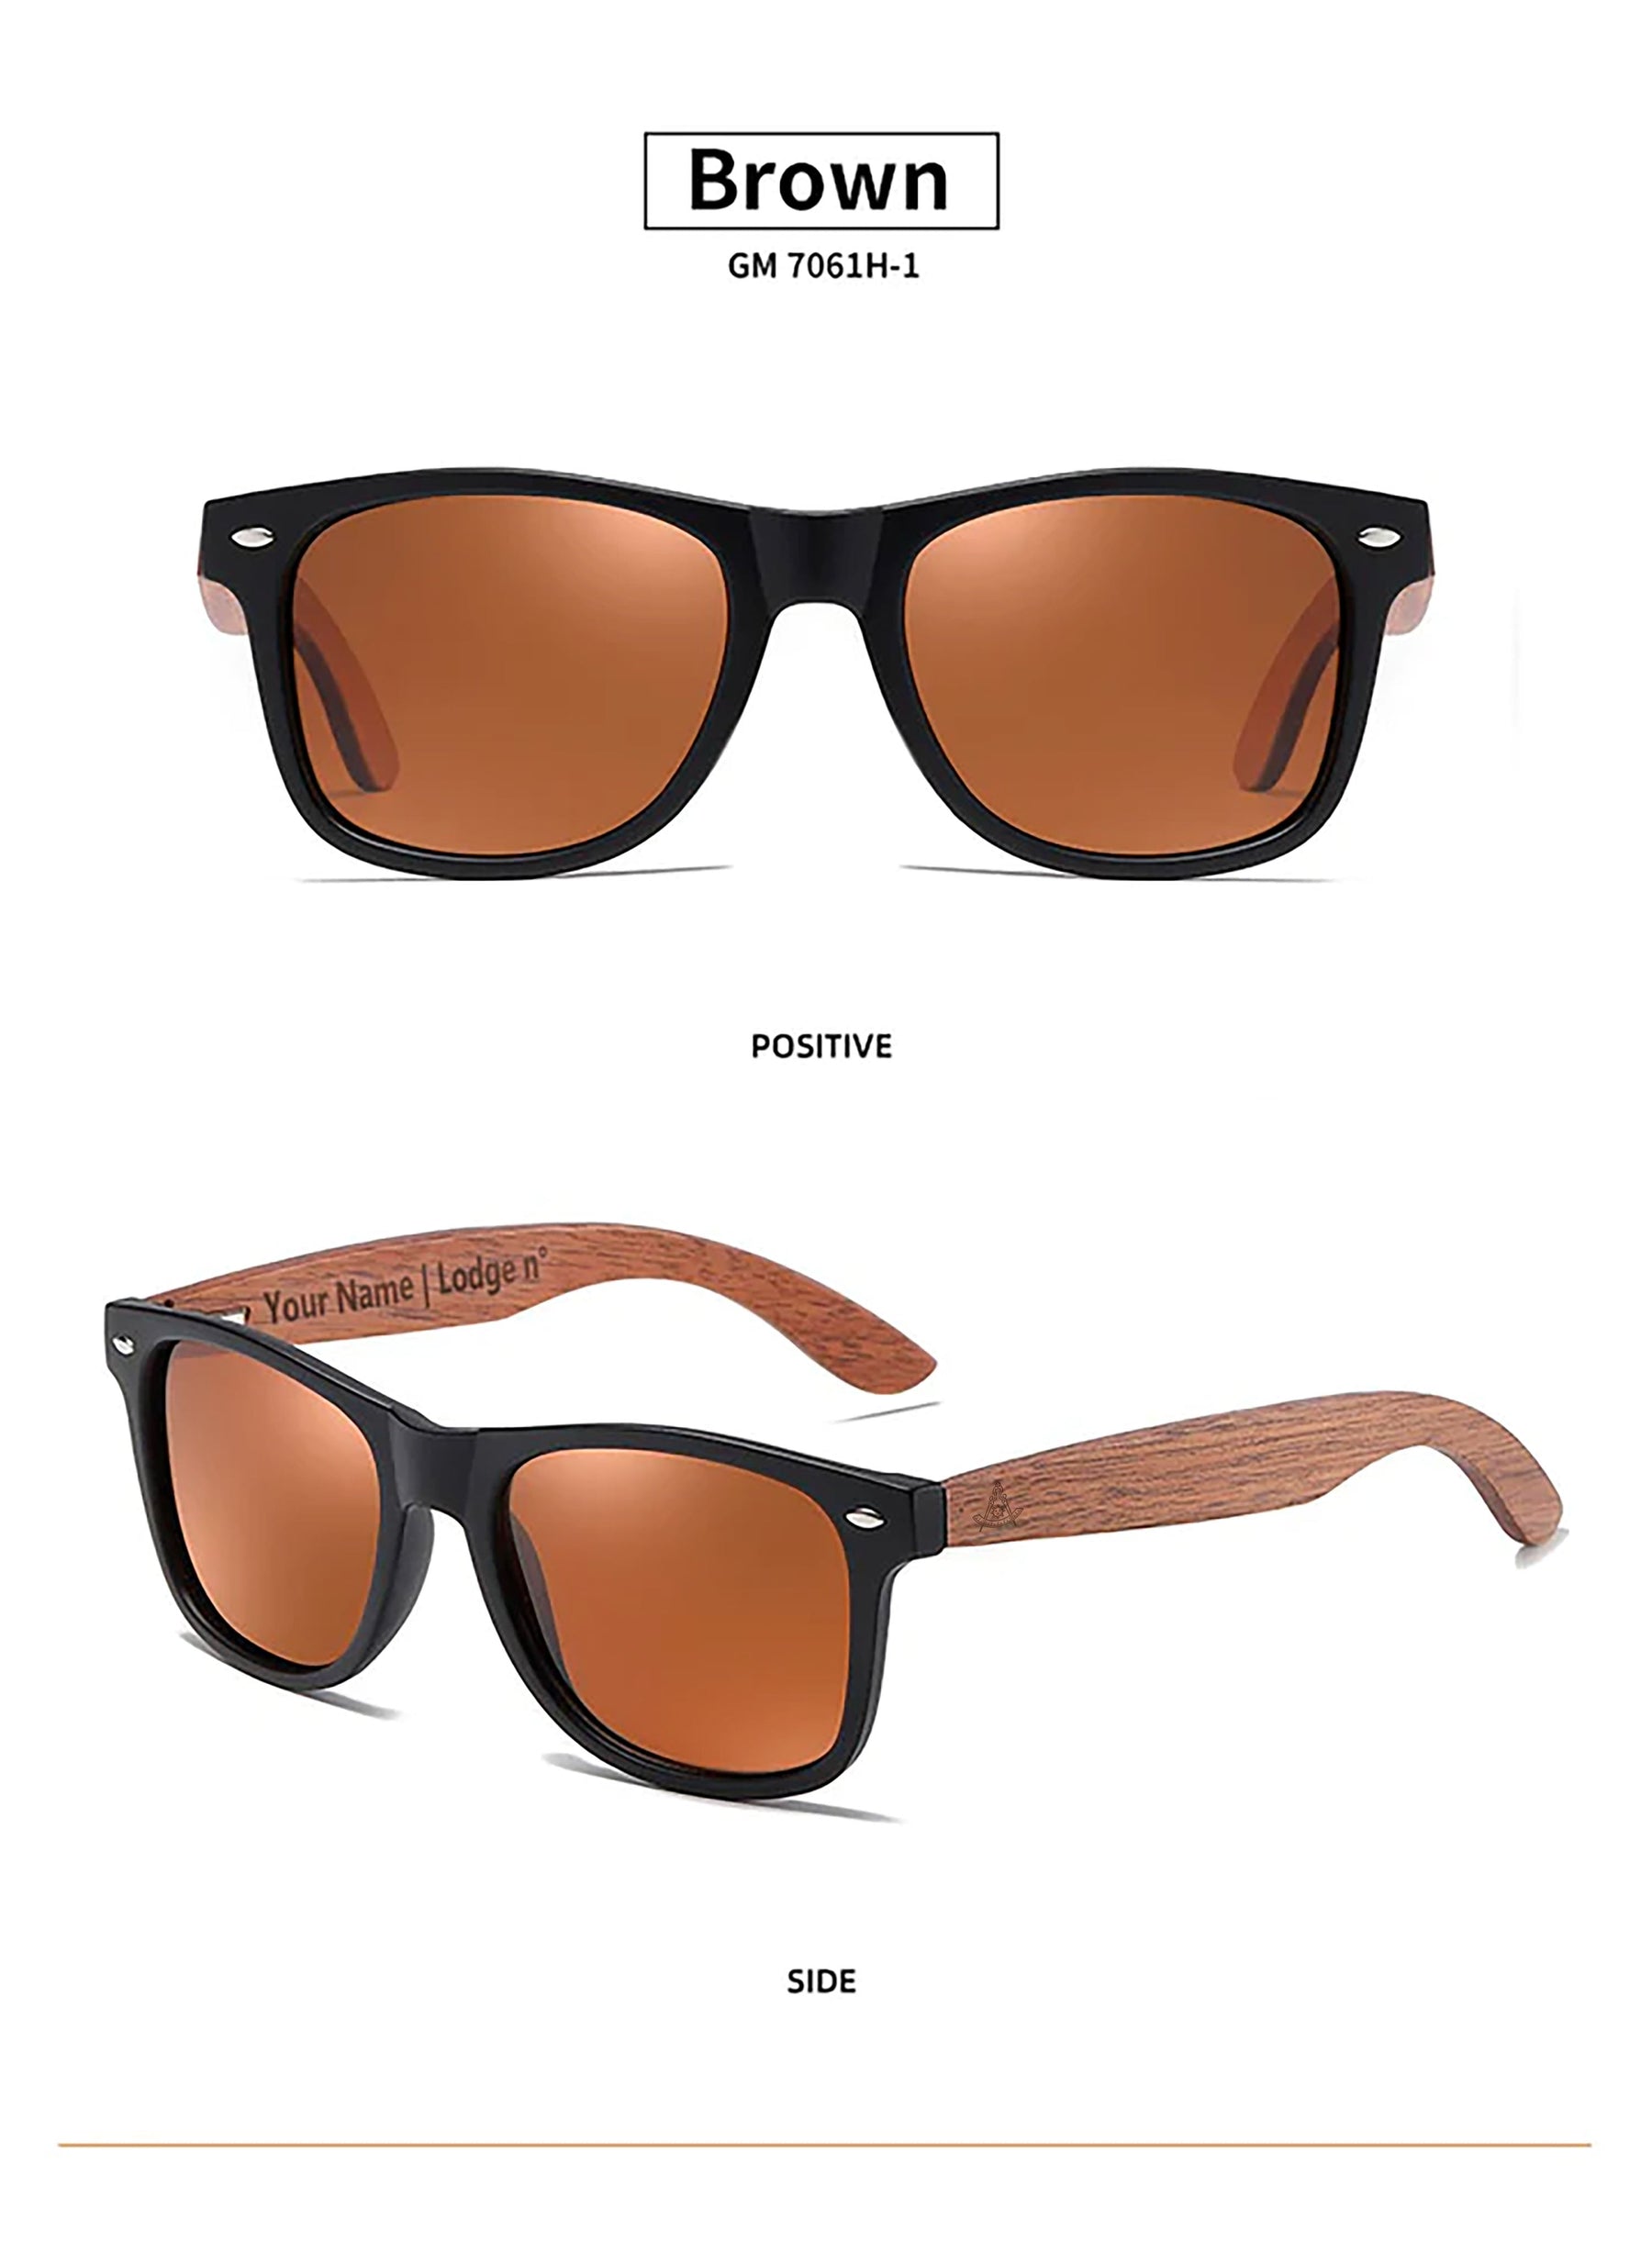 Past Master Blue Lodge California Regulation Sunglasses - UV Protection - Bricks Masons